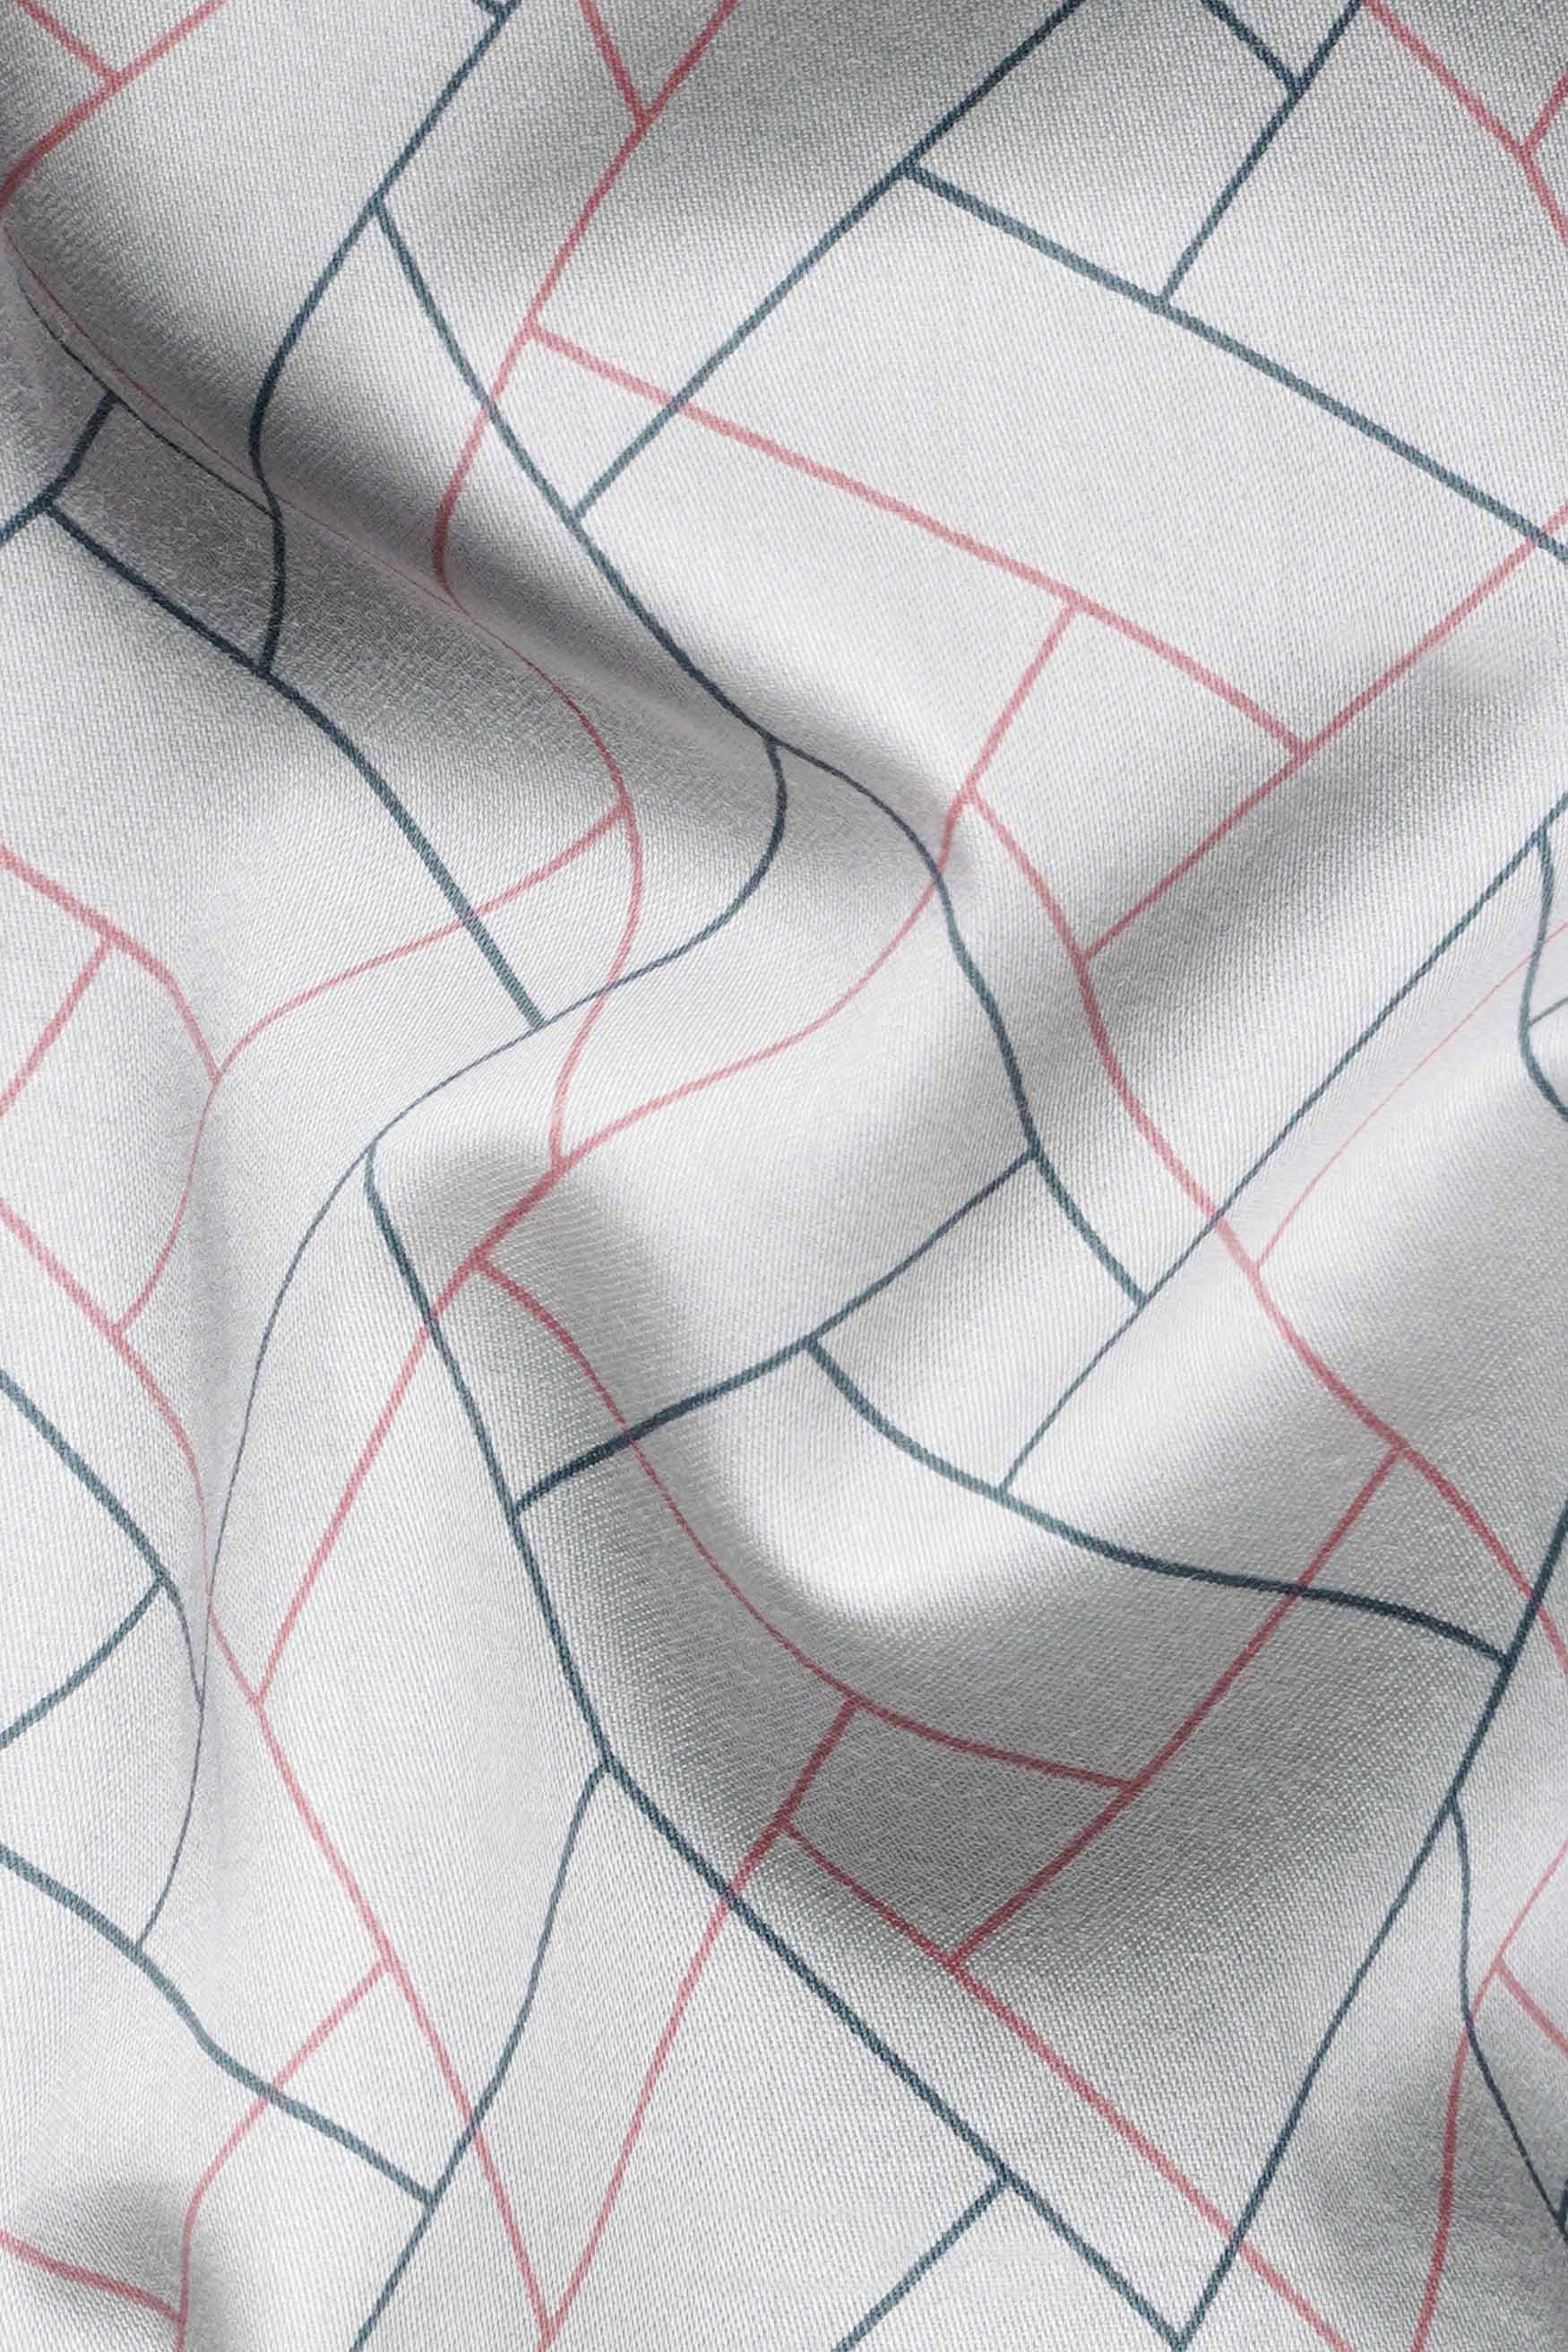 Nickel Grey and Petite Pink Geometric Print Subtle Sheen Super Soft Premium Cotton Shirt